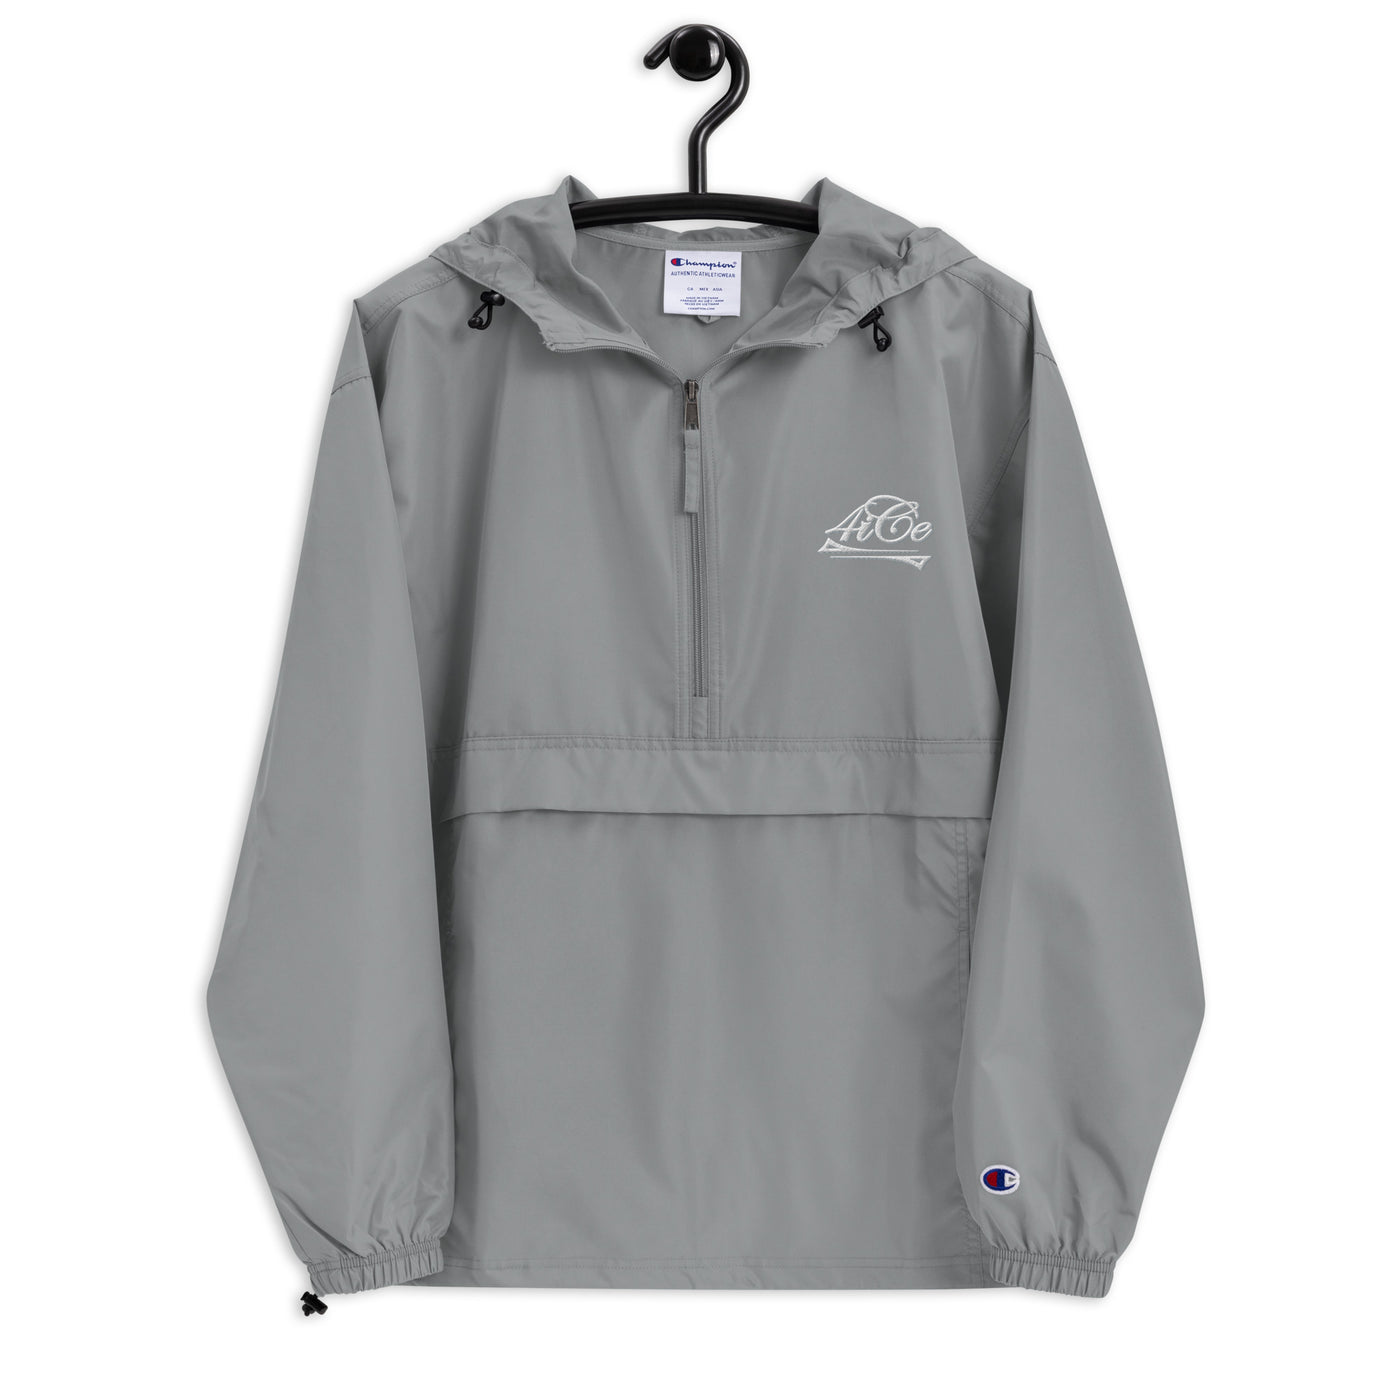 4iCe® Elite Boxing grey embroidered jacket